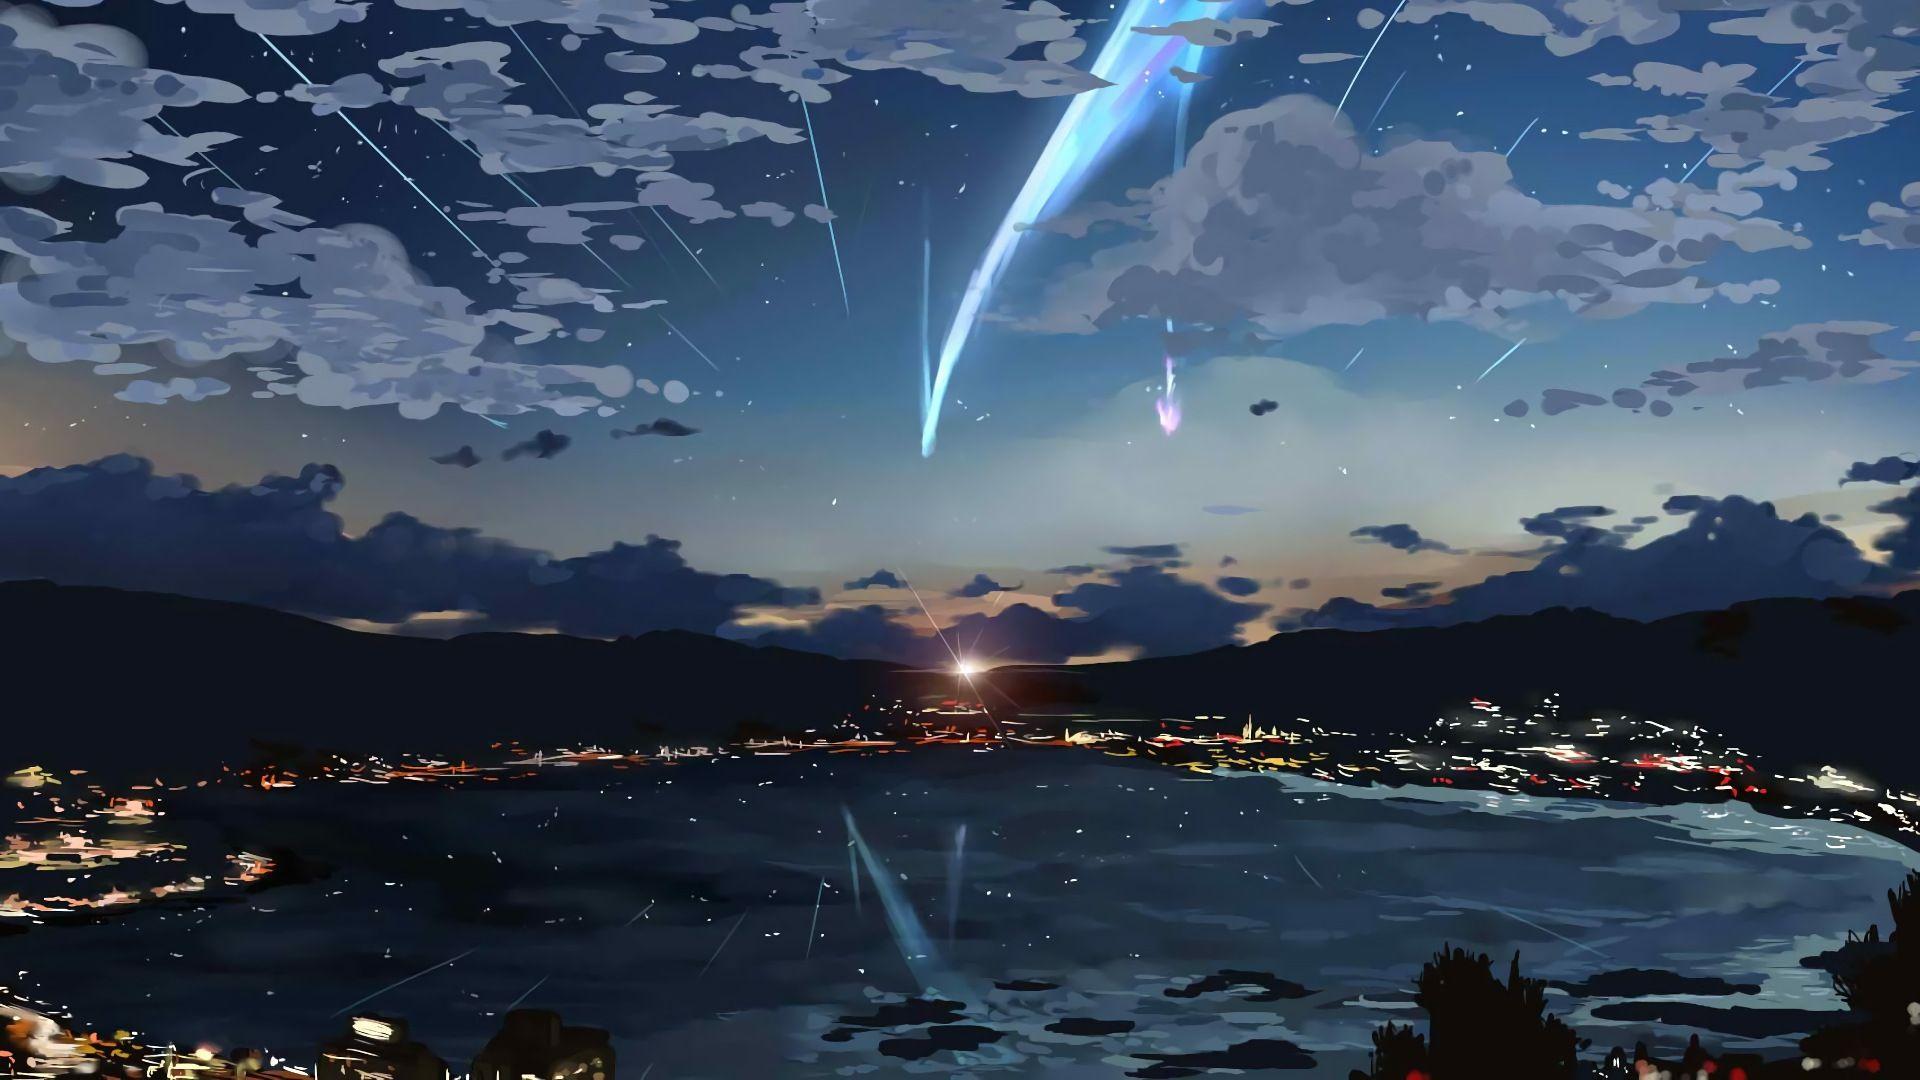 Your Name Anime Comet Scenery Art Wallpaper